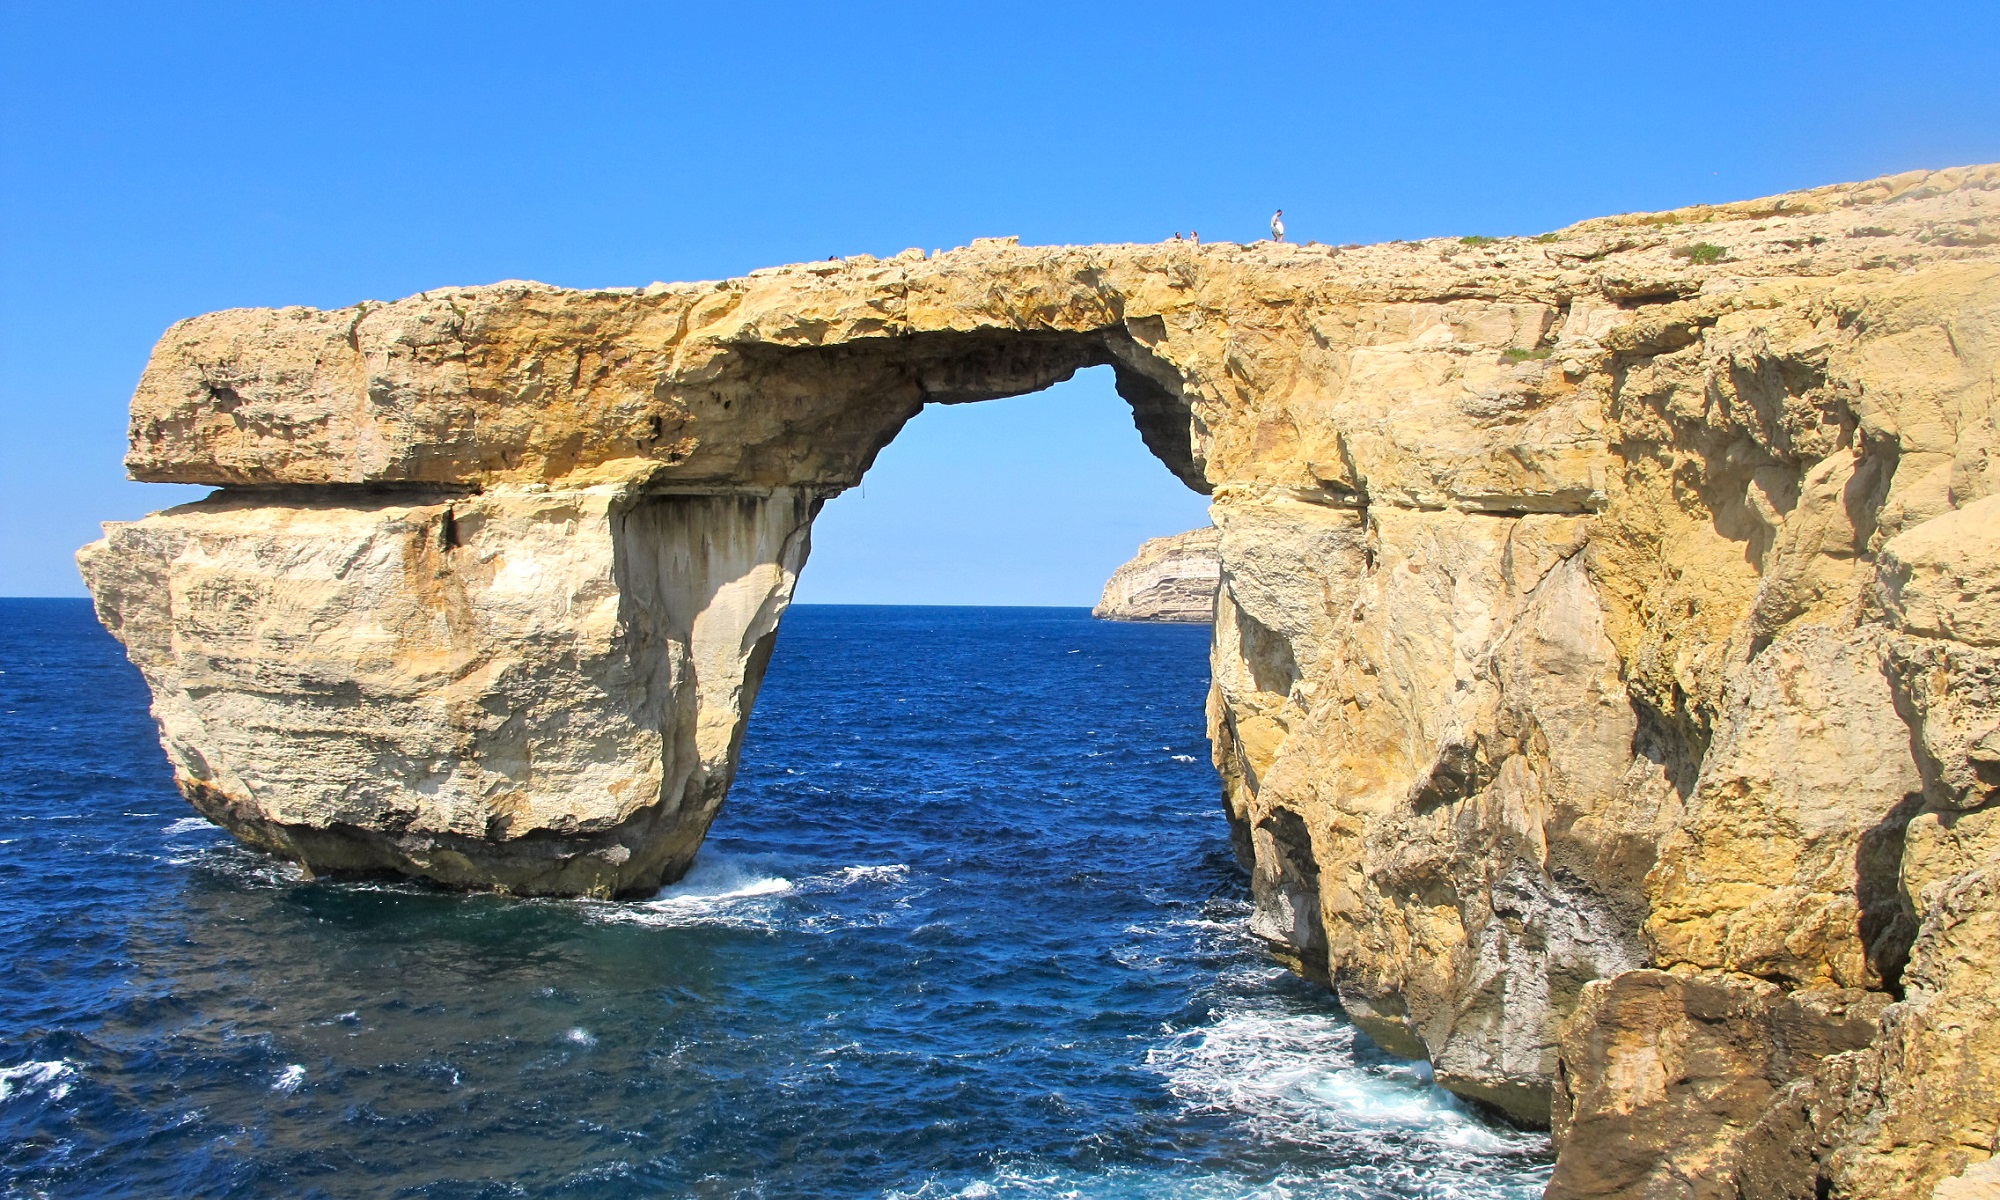 Arch cliff in the sea.